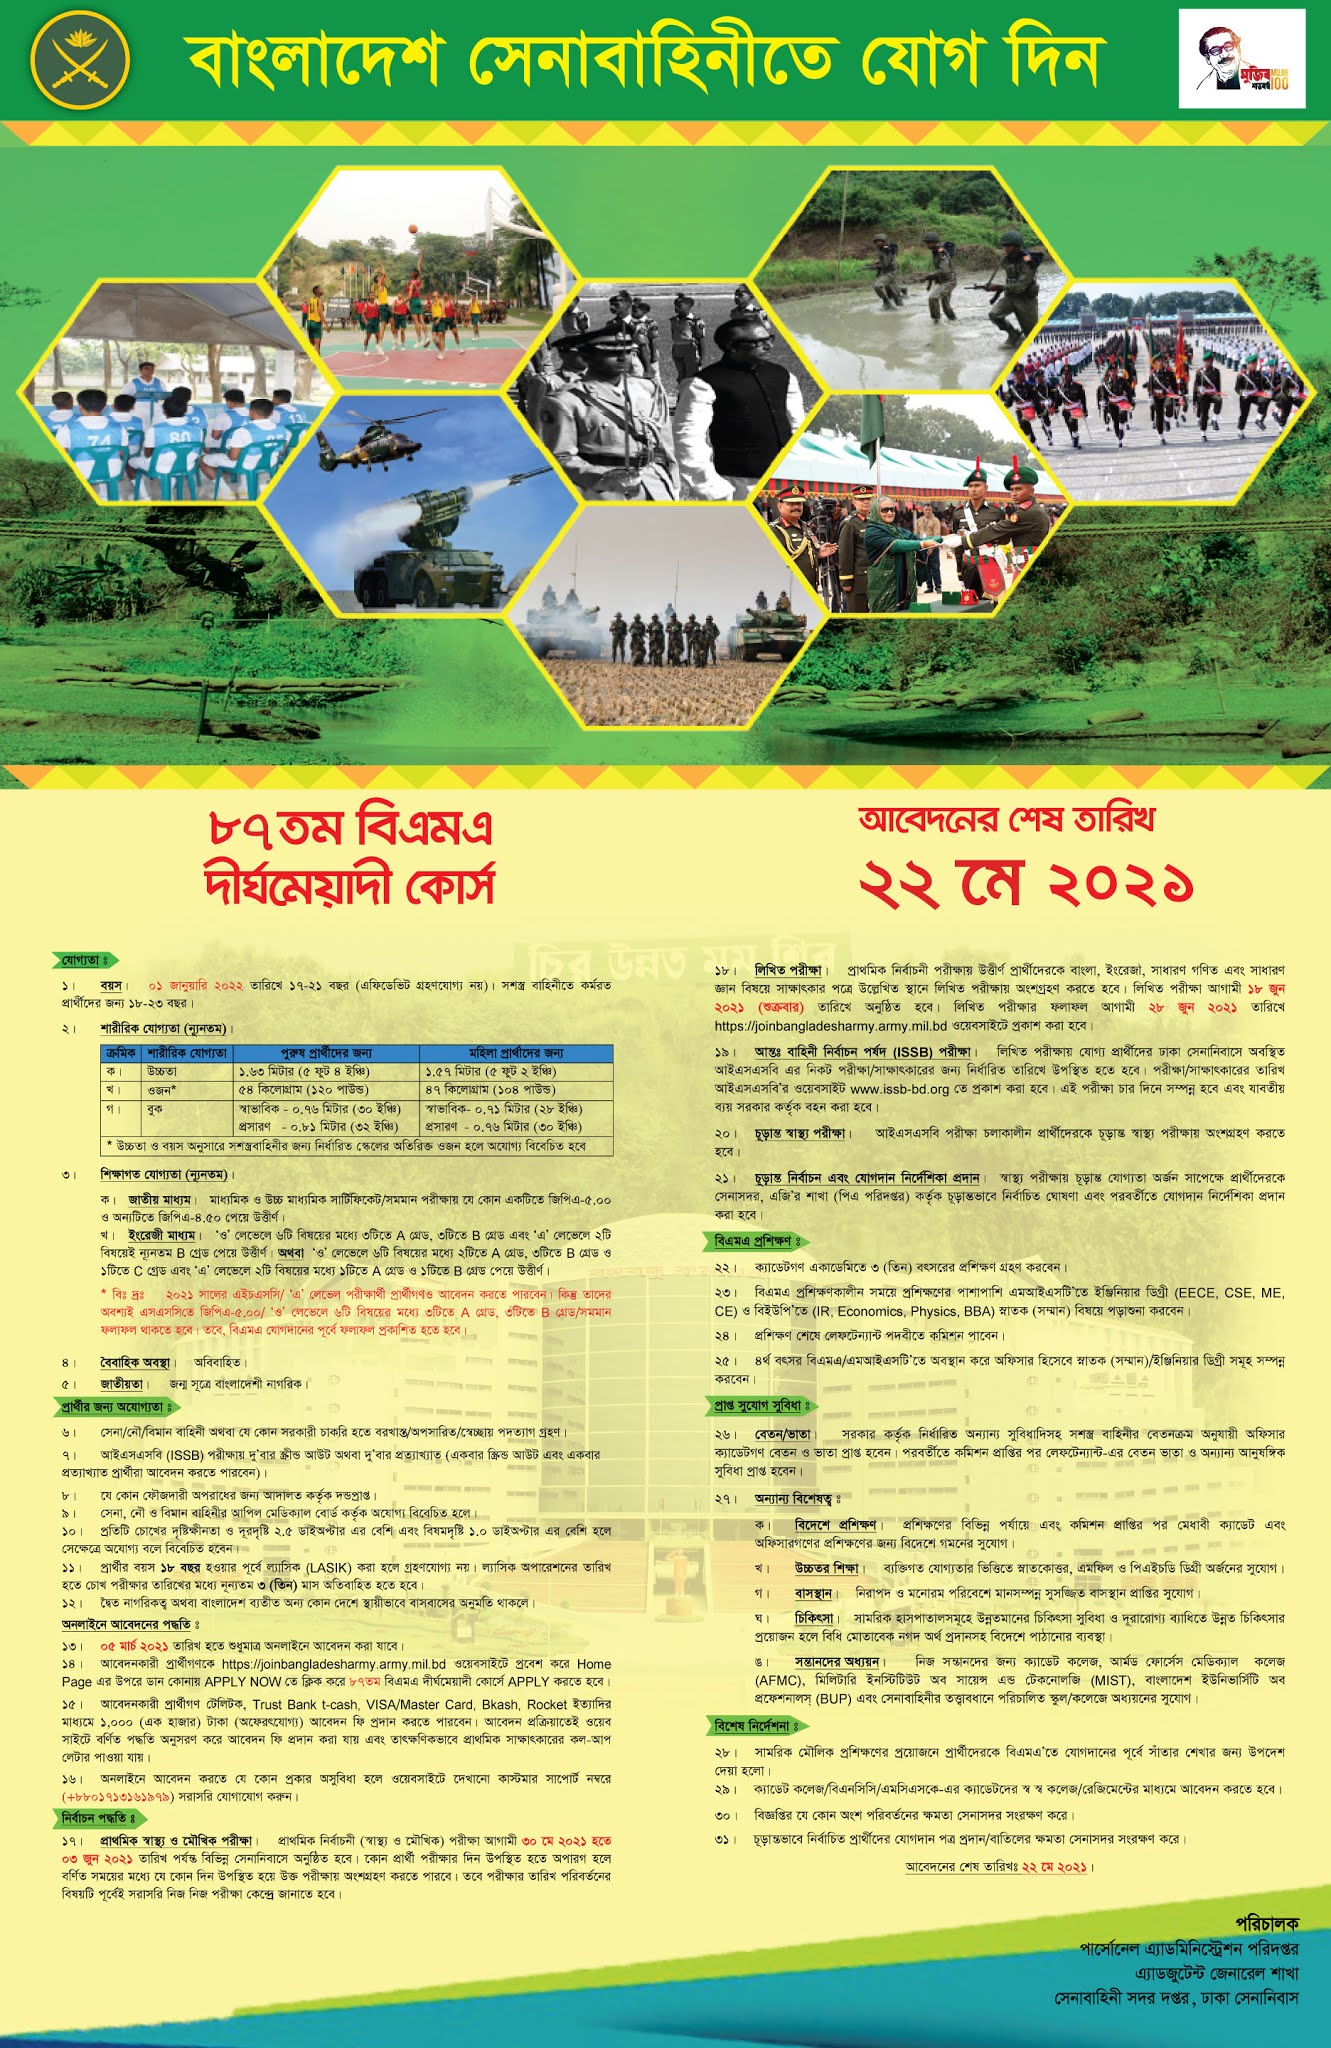 Prothom Alo Weekly Chakrir bakri - Job Newspaper 19 March 2021 - প্রথম আলো চাকরির খবর-চাকরি বাকরি ১৯ মার্চ ২০২১